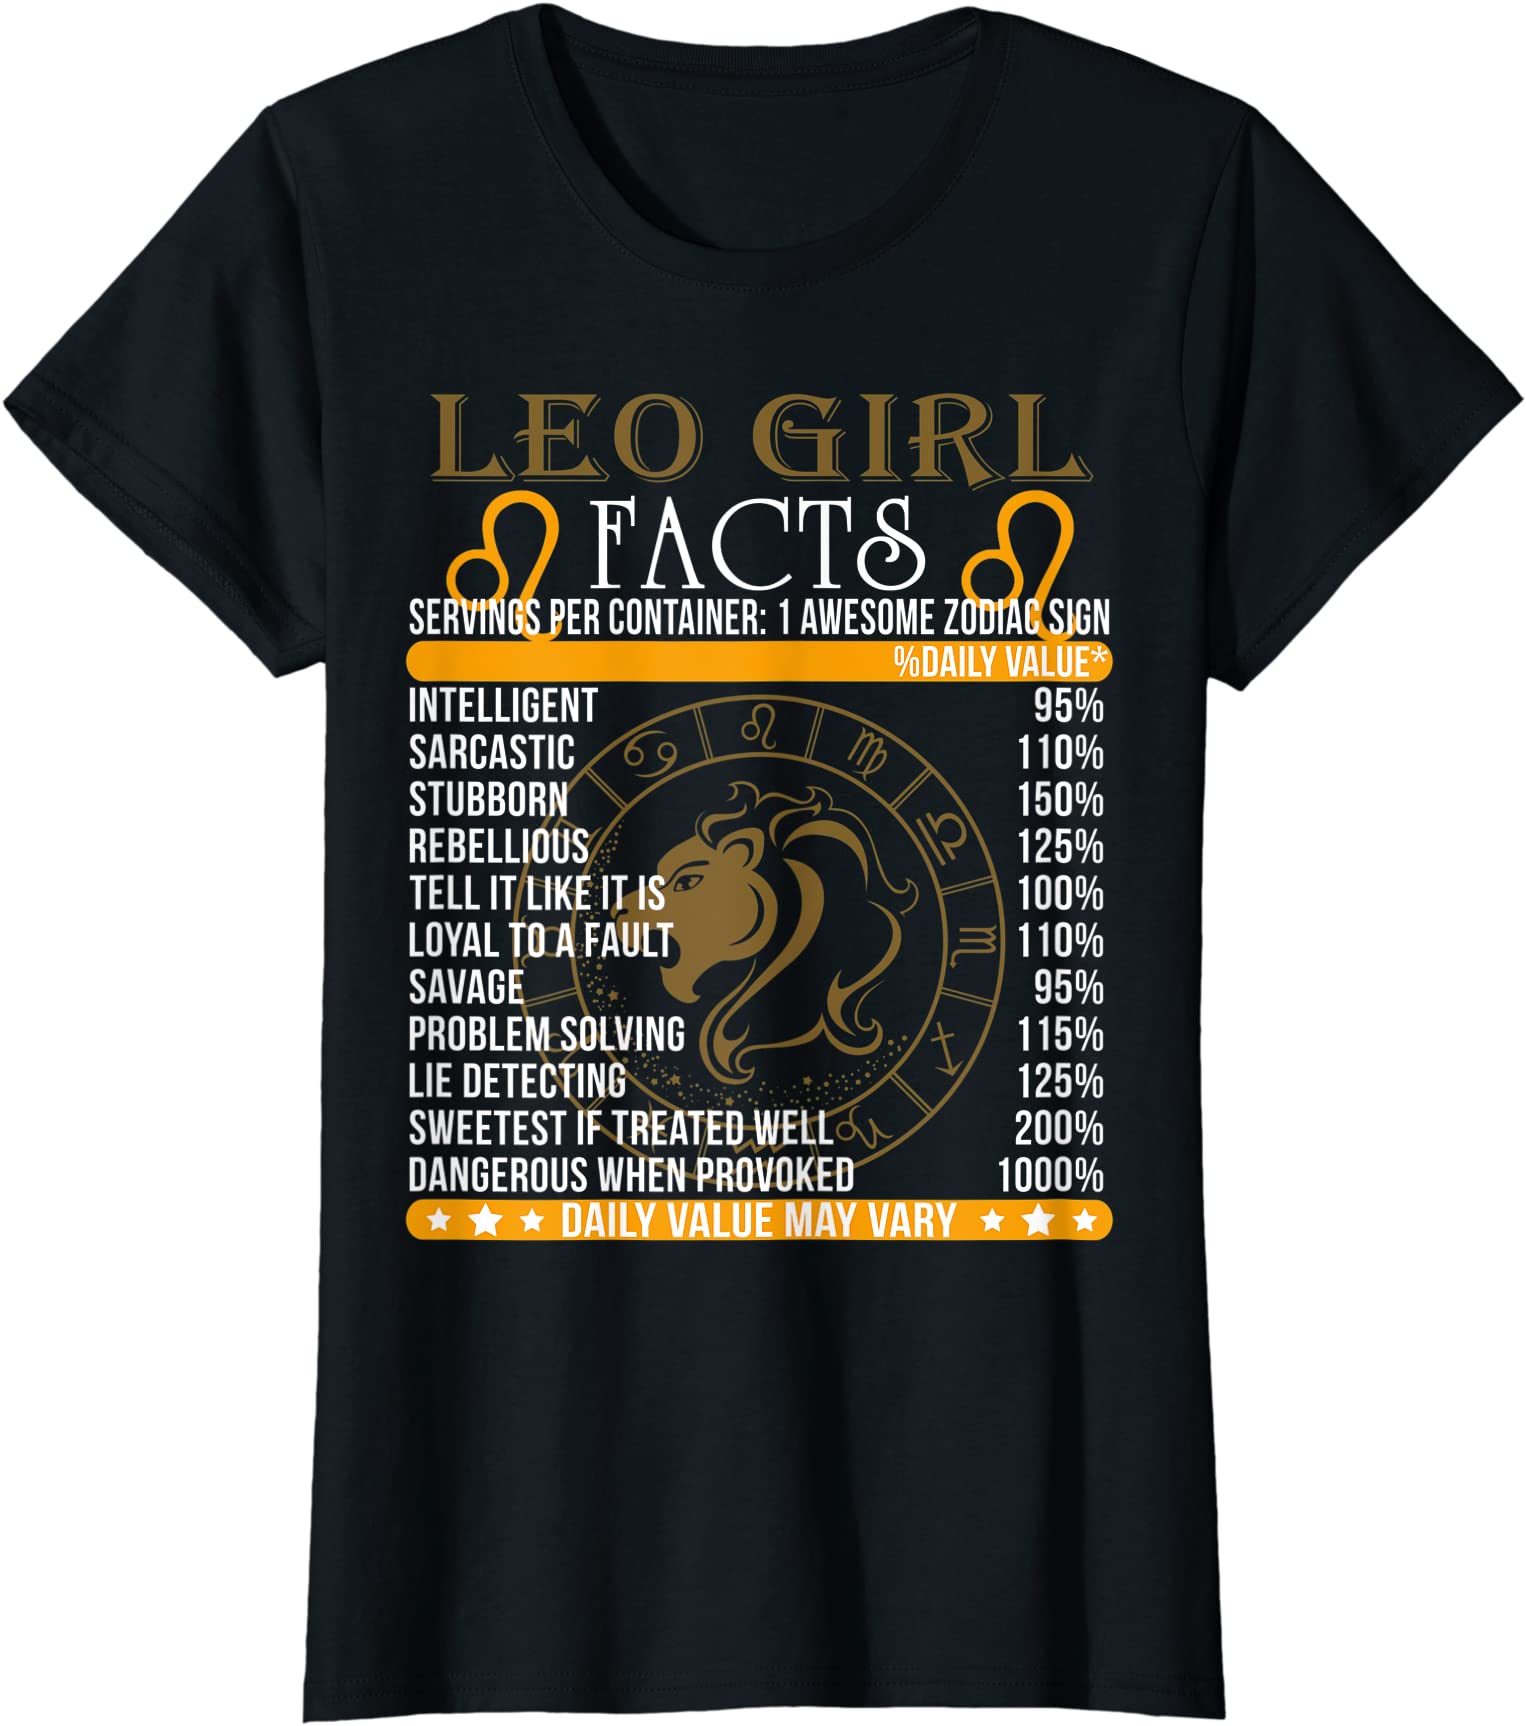 leo girl facts awesome zodiac sign tee shirts women - Buy t-shirt designs